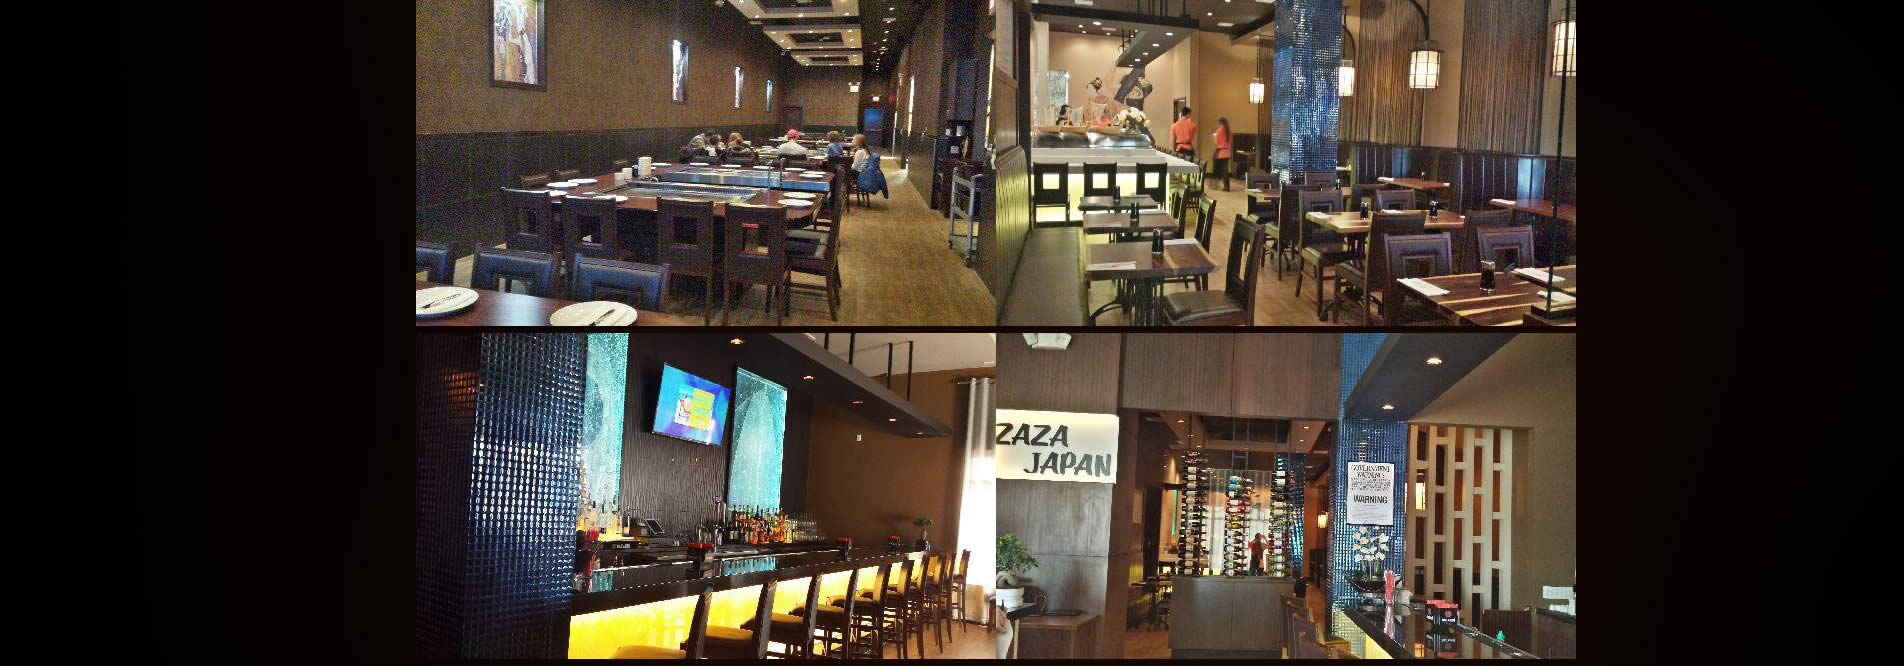 Zaza restaurant